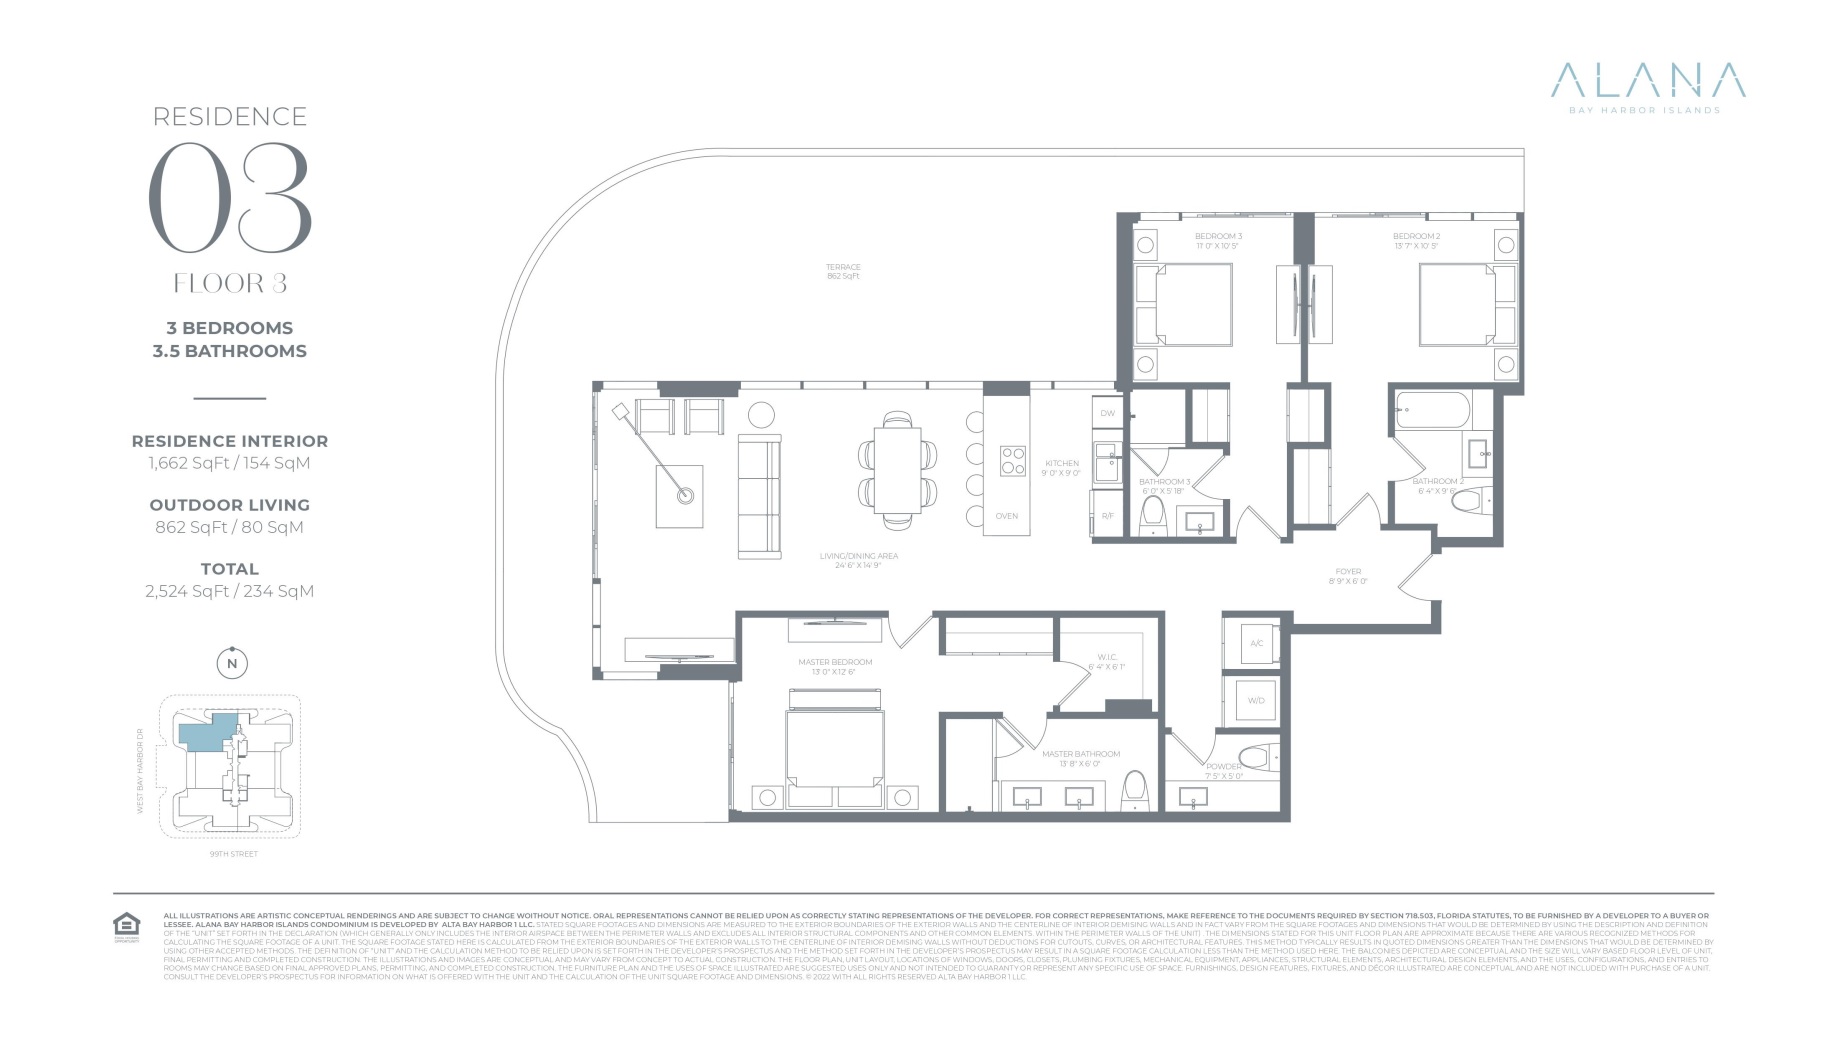 Alana_Floorplan_Residence03_floor3_3bed_3,5bath